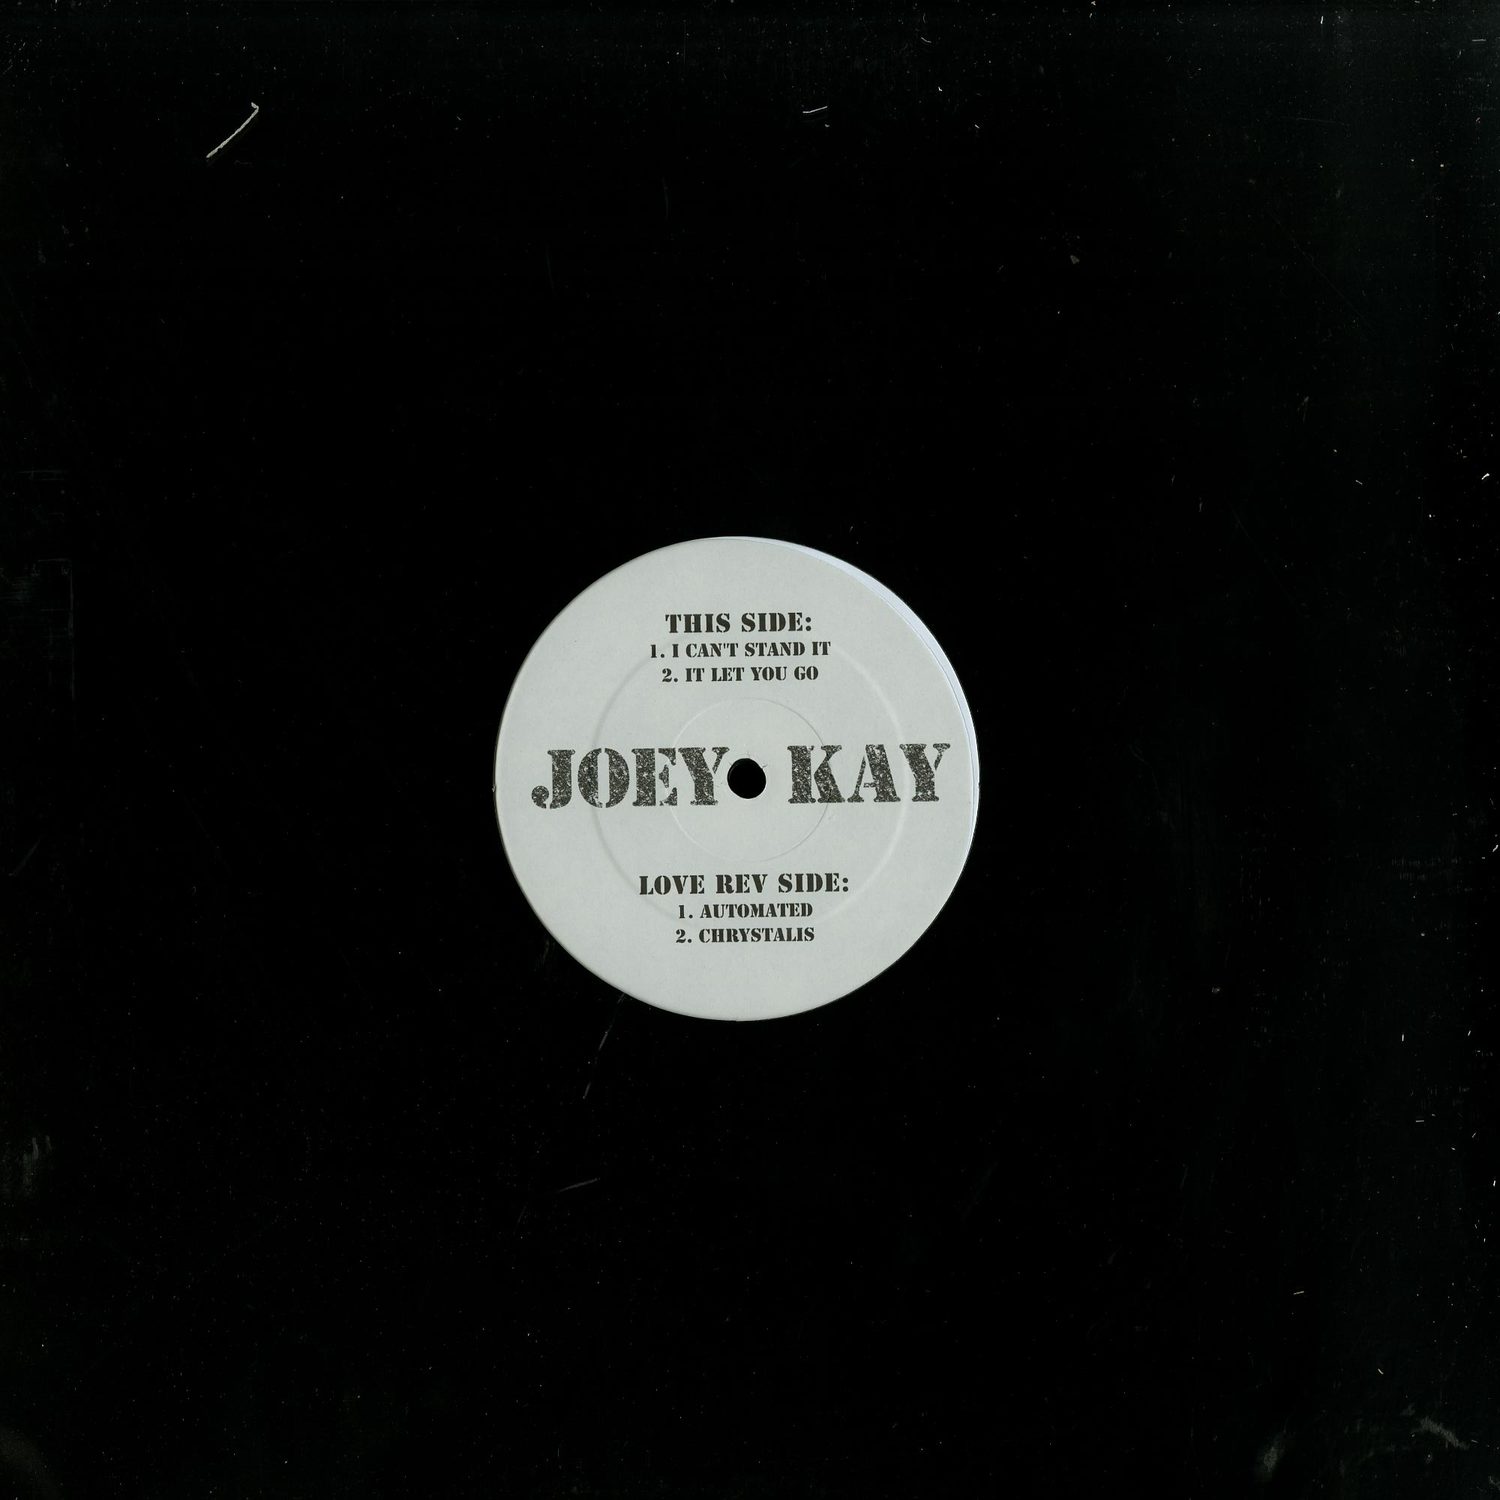 Joey Kay - LOVE REVOLUTION #4